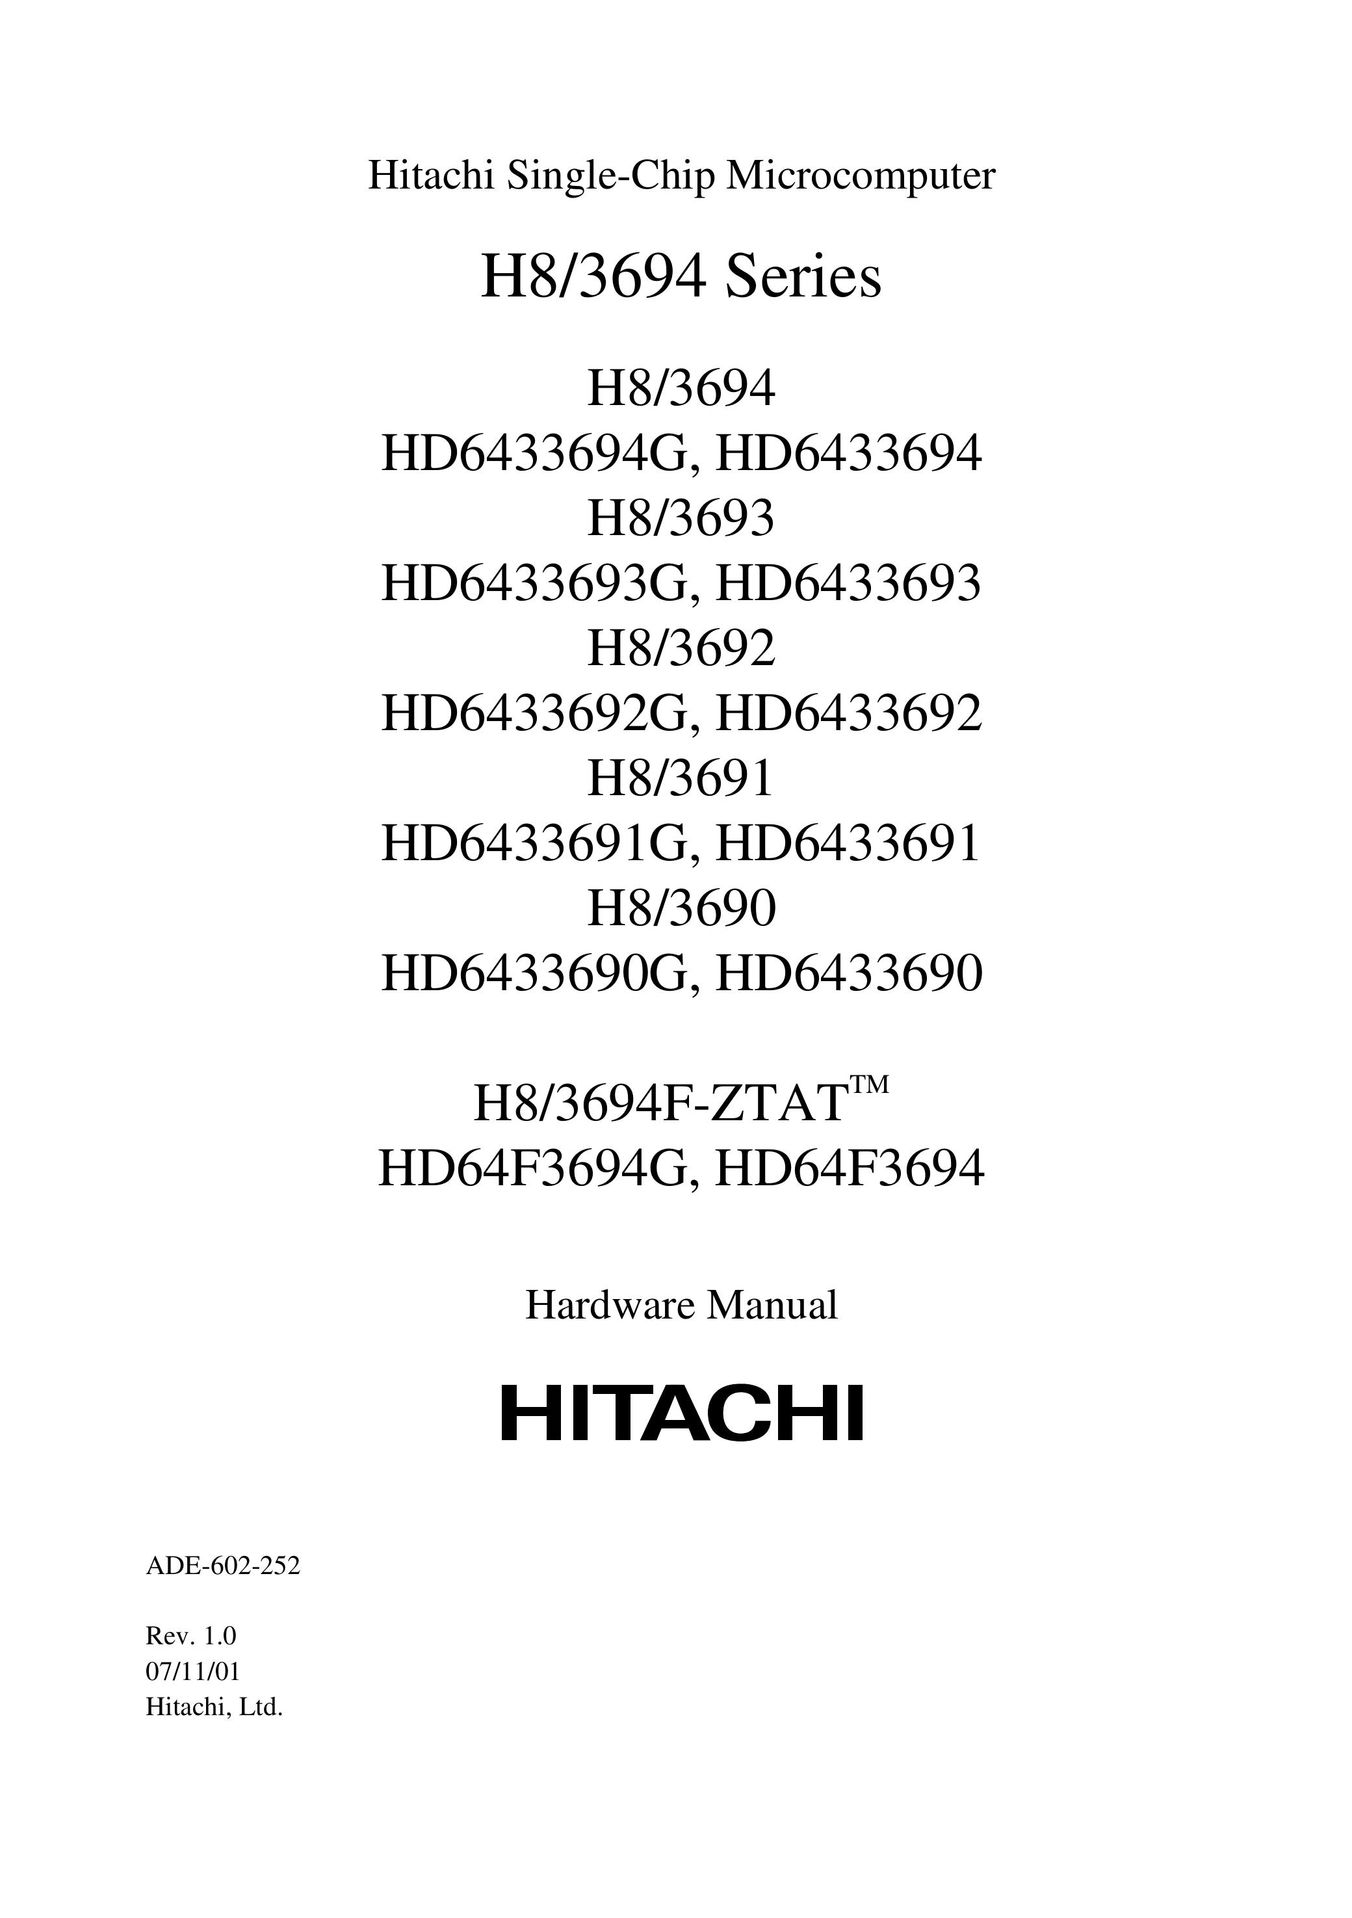 Hitachi HD6433691 TV Mount User Manual